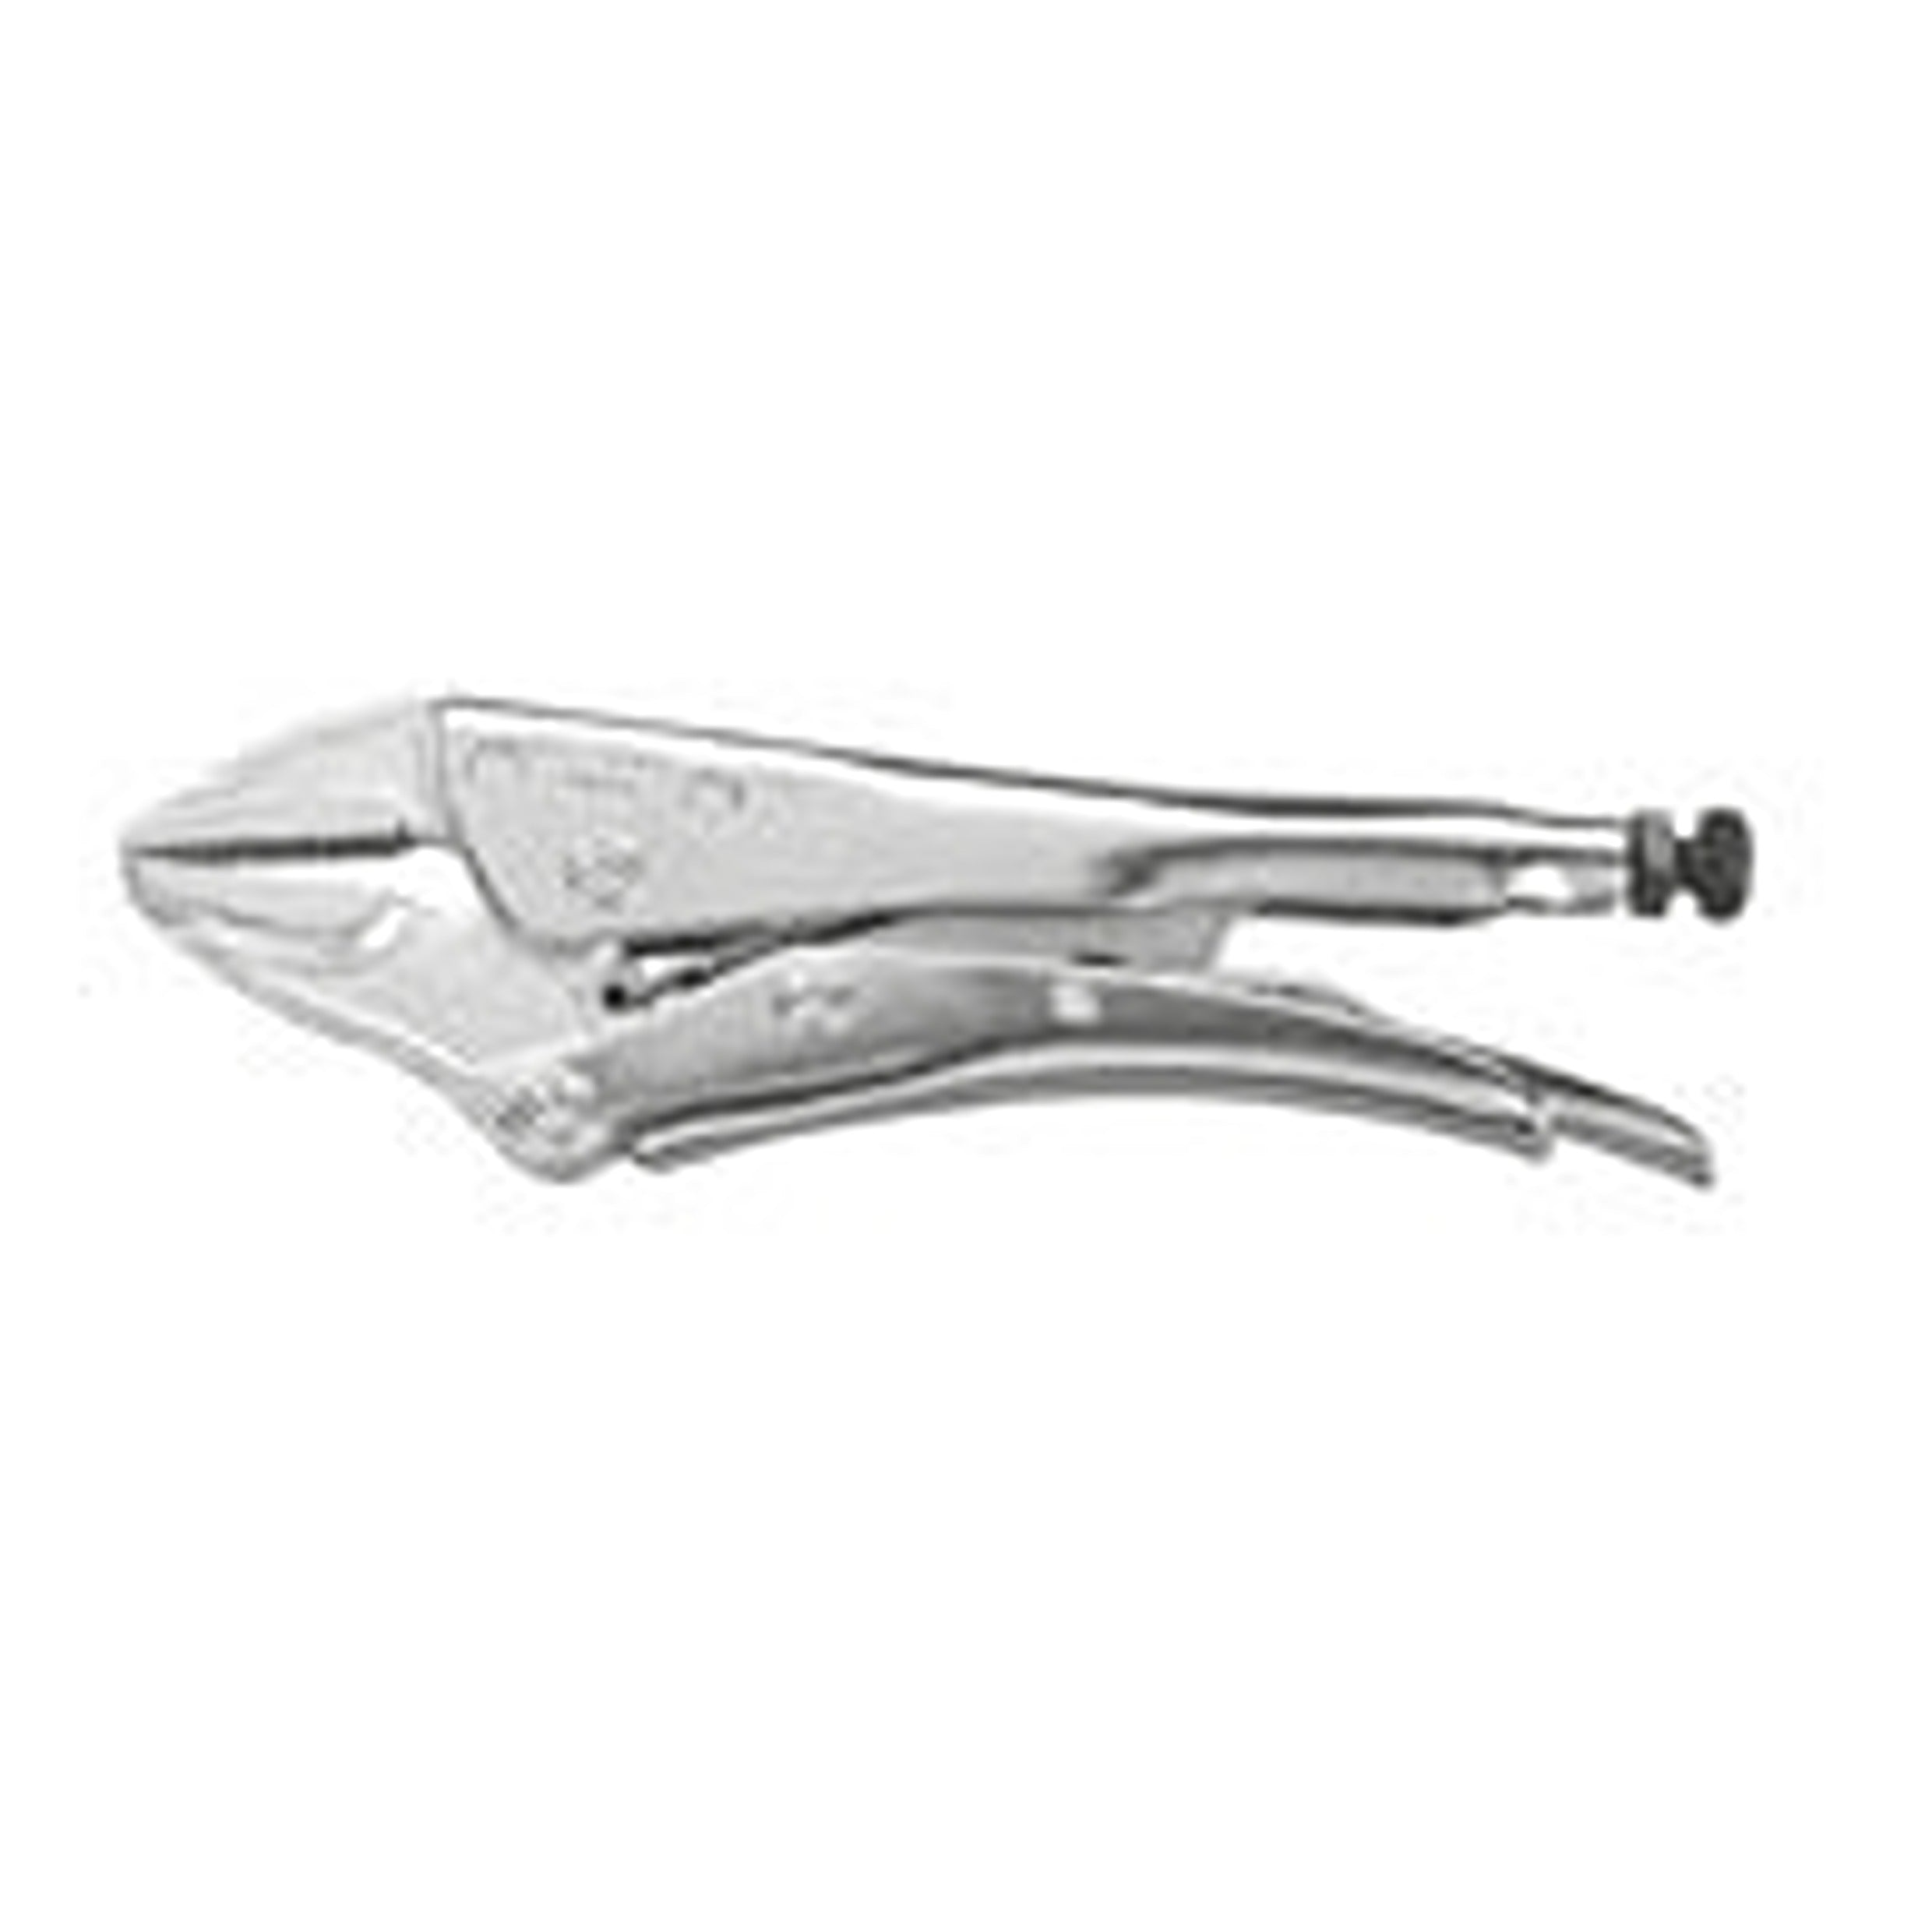 BRITOOL PM900/901 Curved Jaws Grip Plier (BRITOOL) - Premium Curved Jaws Grip Plier from BRITOOL - Shop now at Yew Aik.